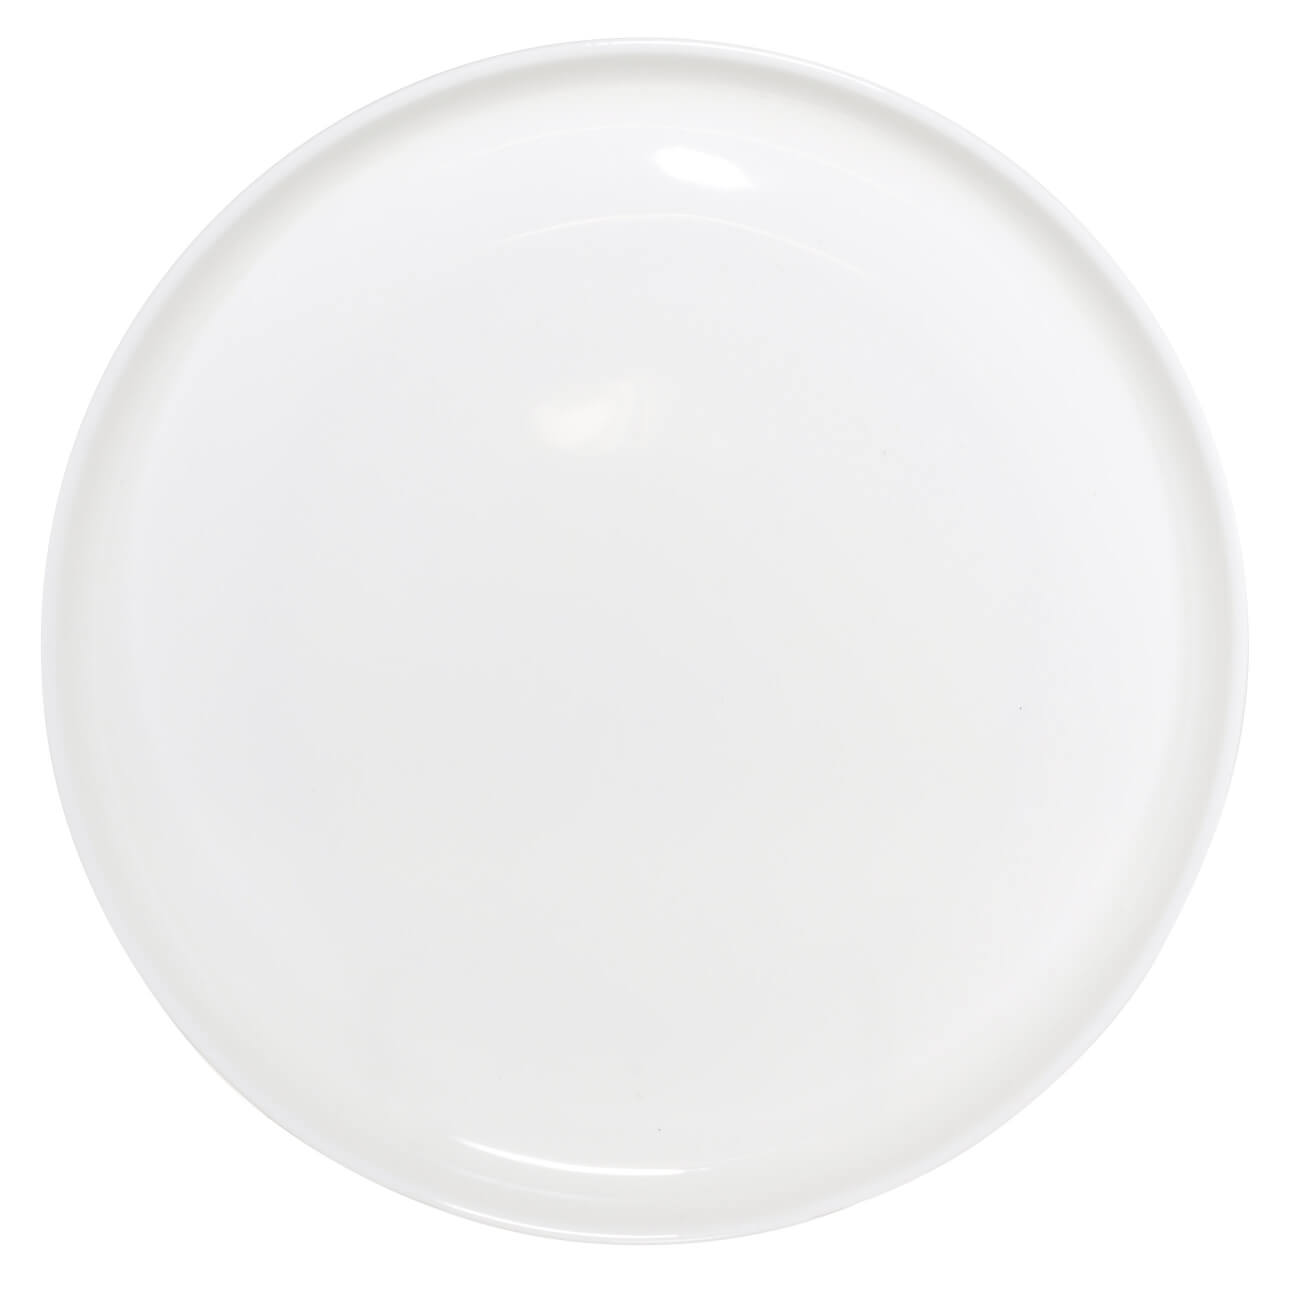 Тарелка обеденная, 26 см, фарфор F, белая, Ideal white тарелка обеденная 28 см фарфор f antarctica